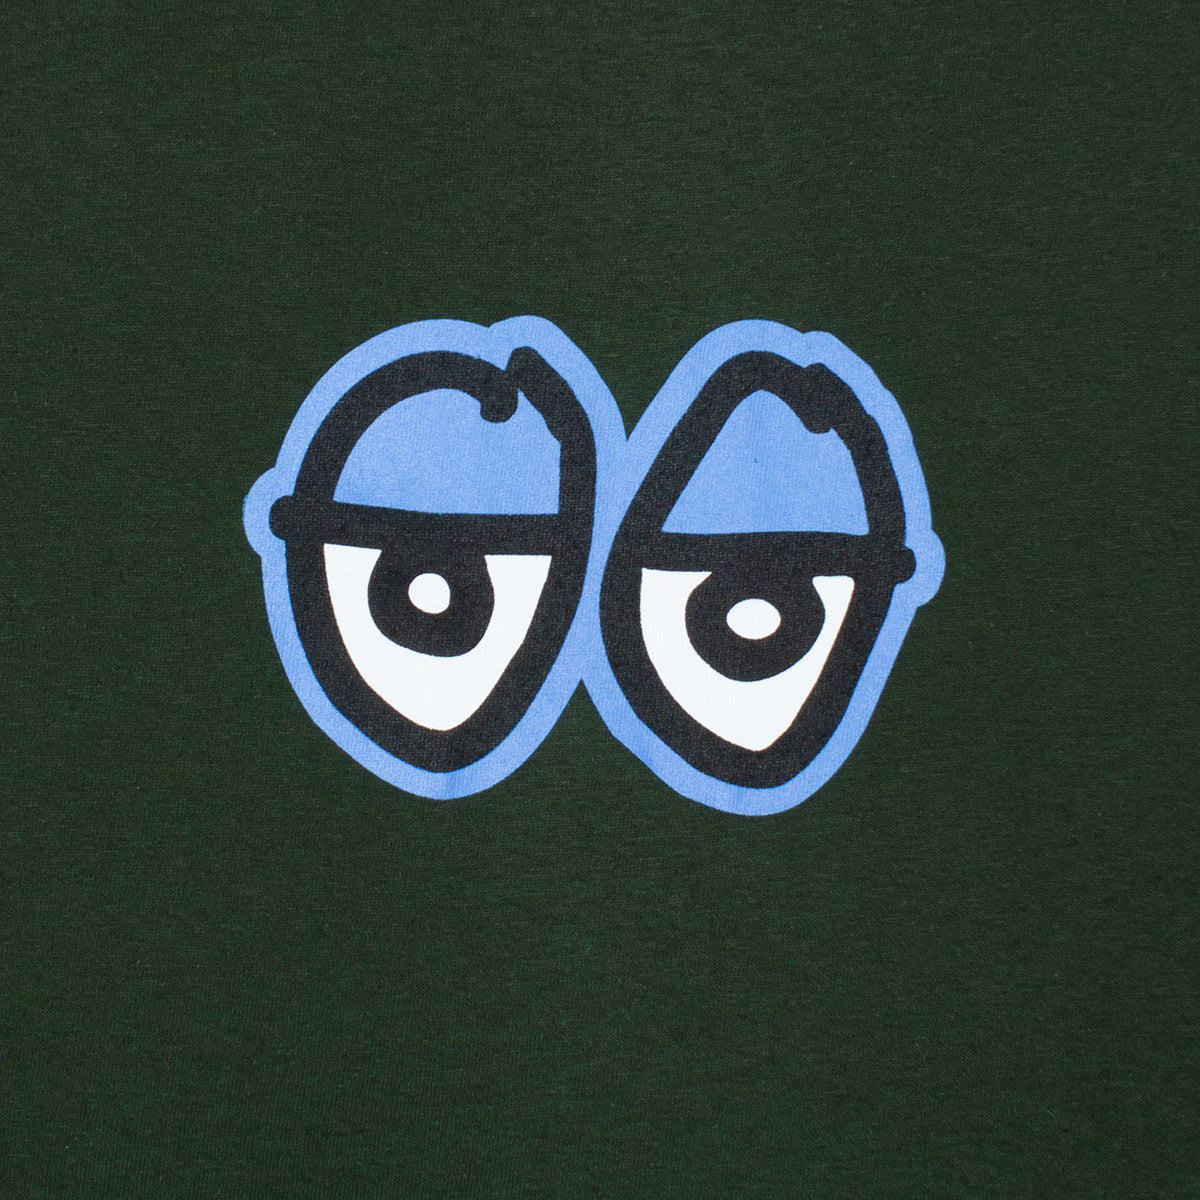 Krooked Eyes S/S T-Shirt